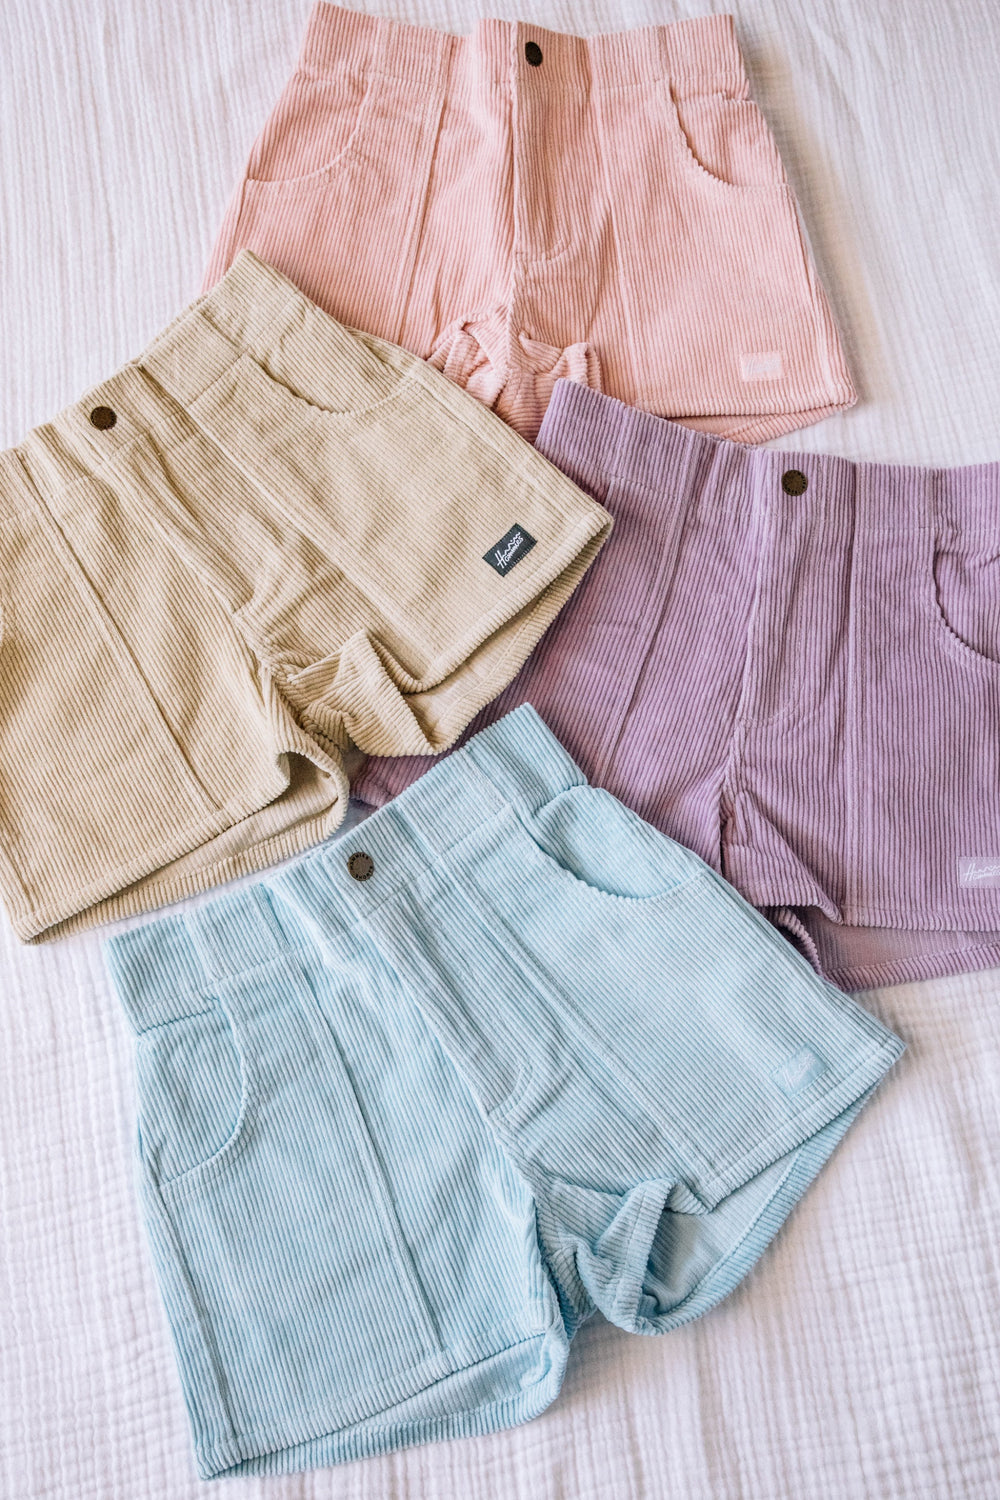 Powder Purple Hammies Shorts